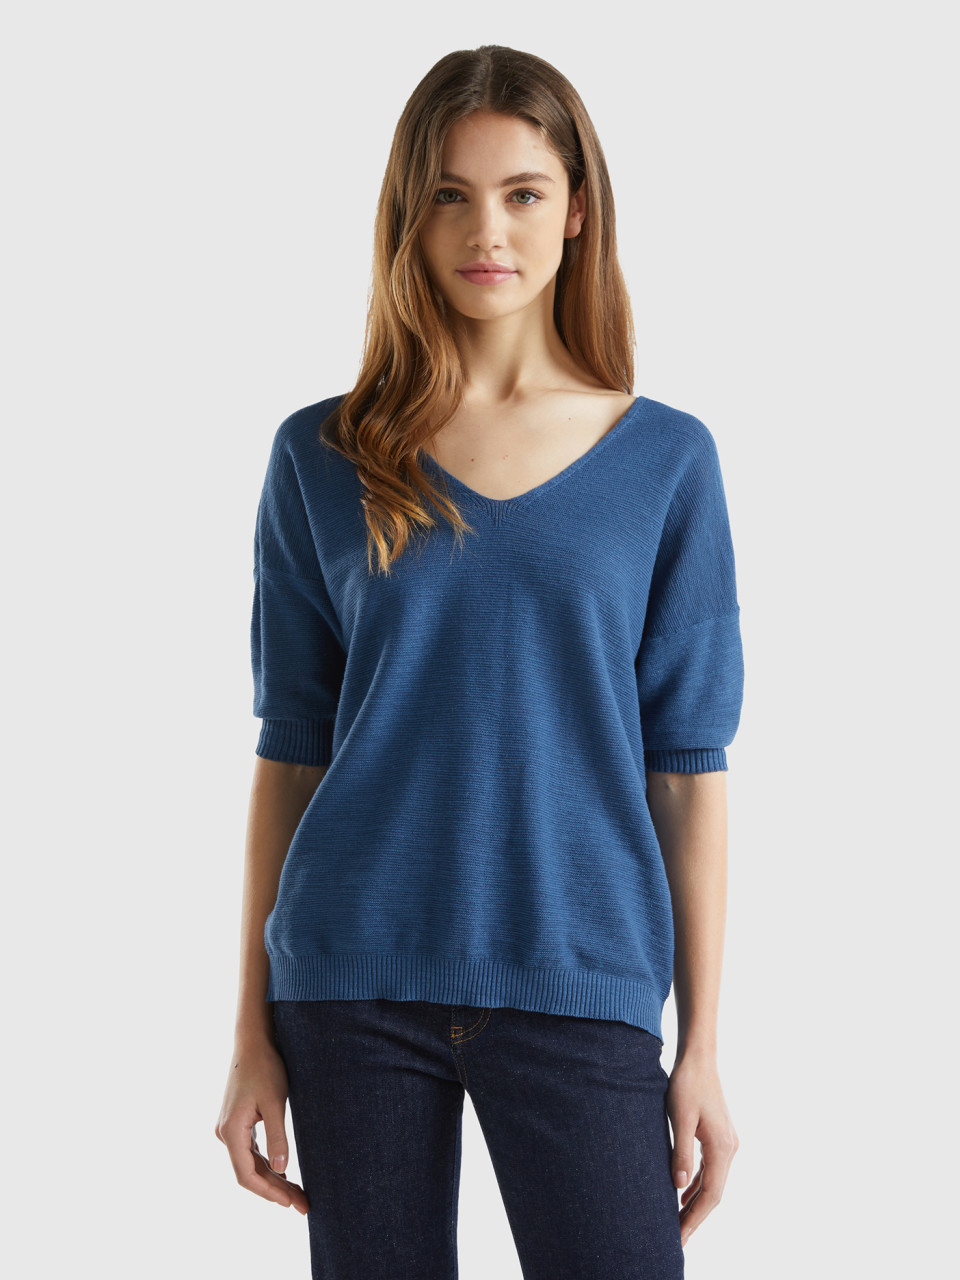 Benetton, Sweater In Linen And Cotton Blend, Air Force Blue, Women